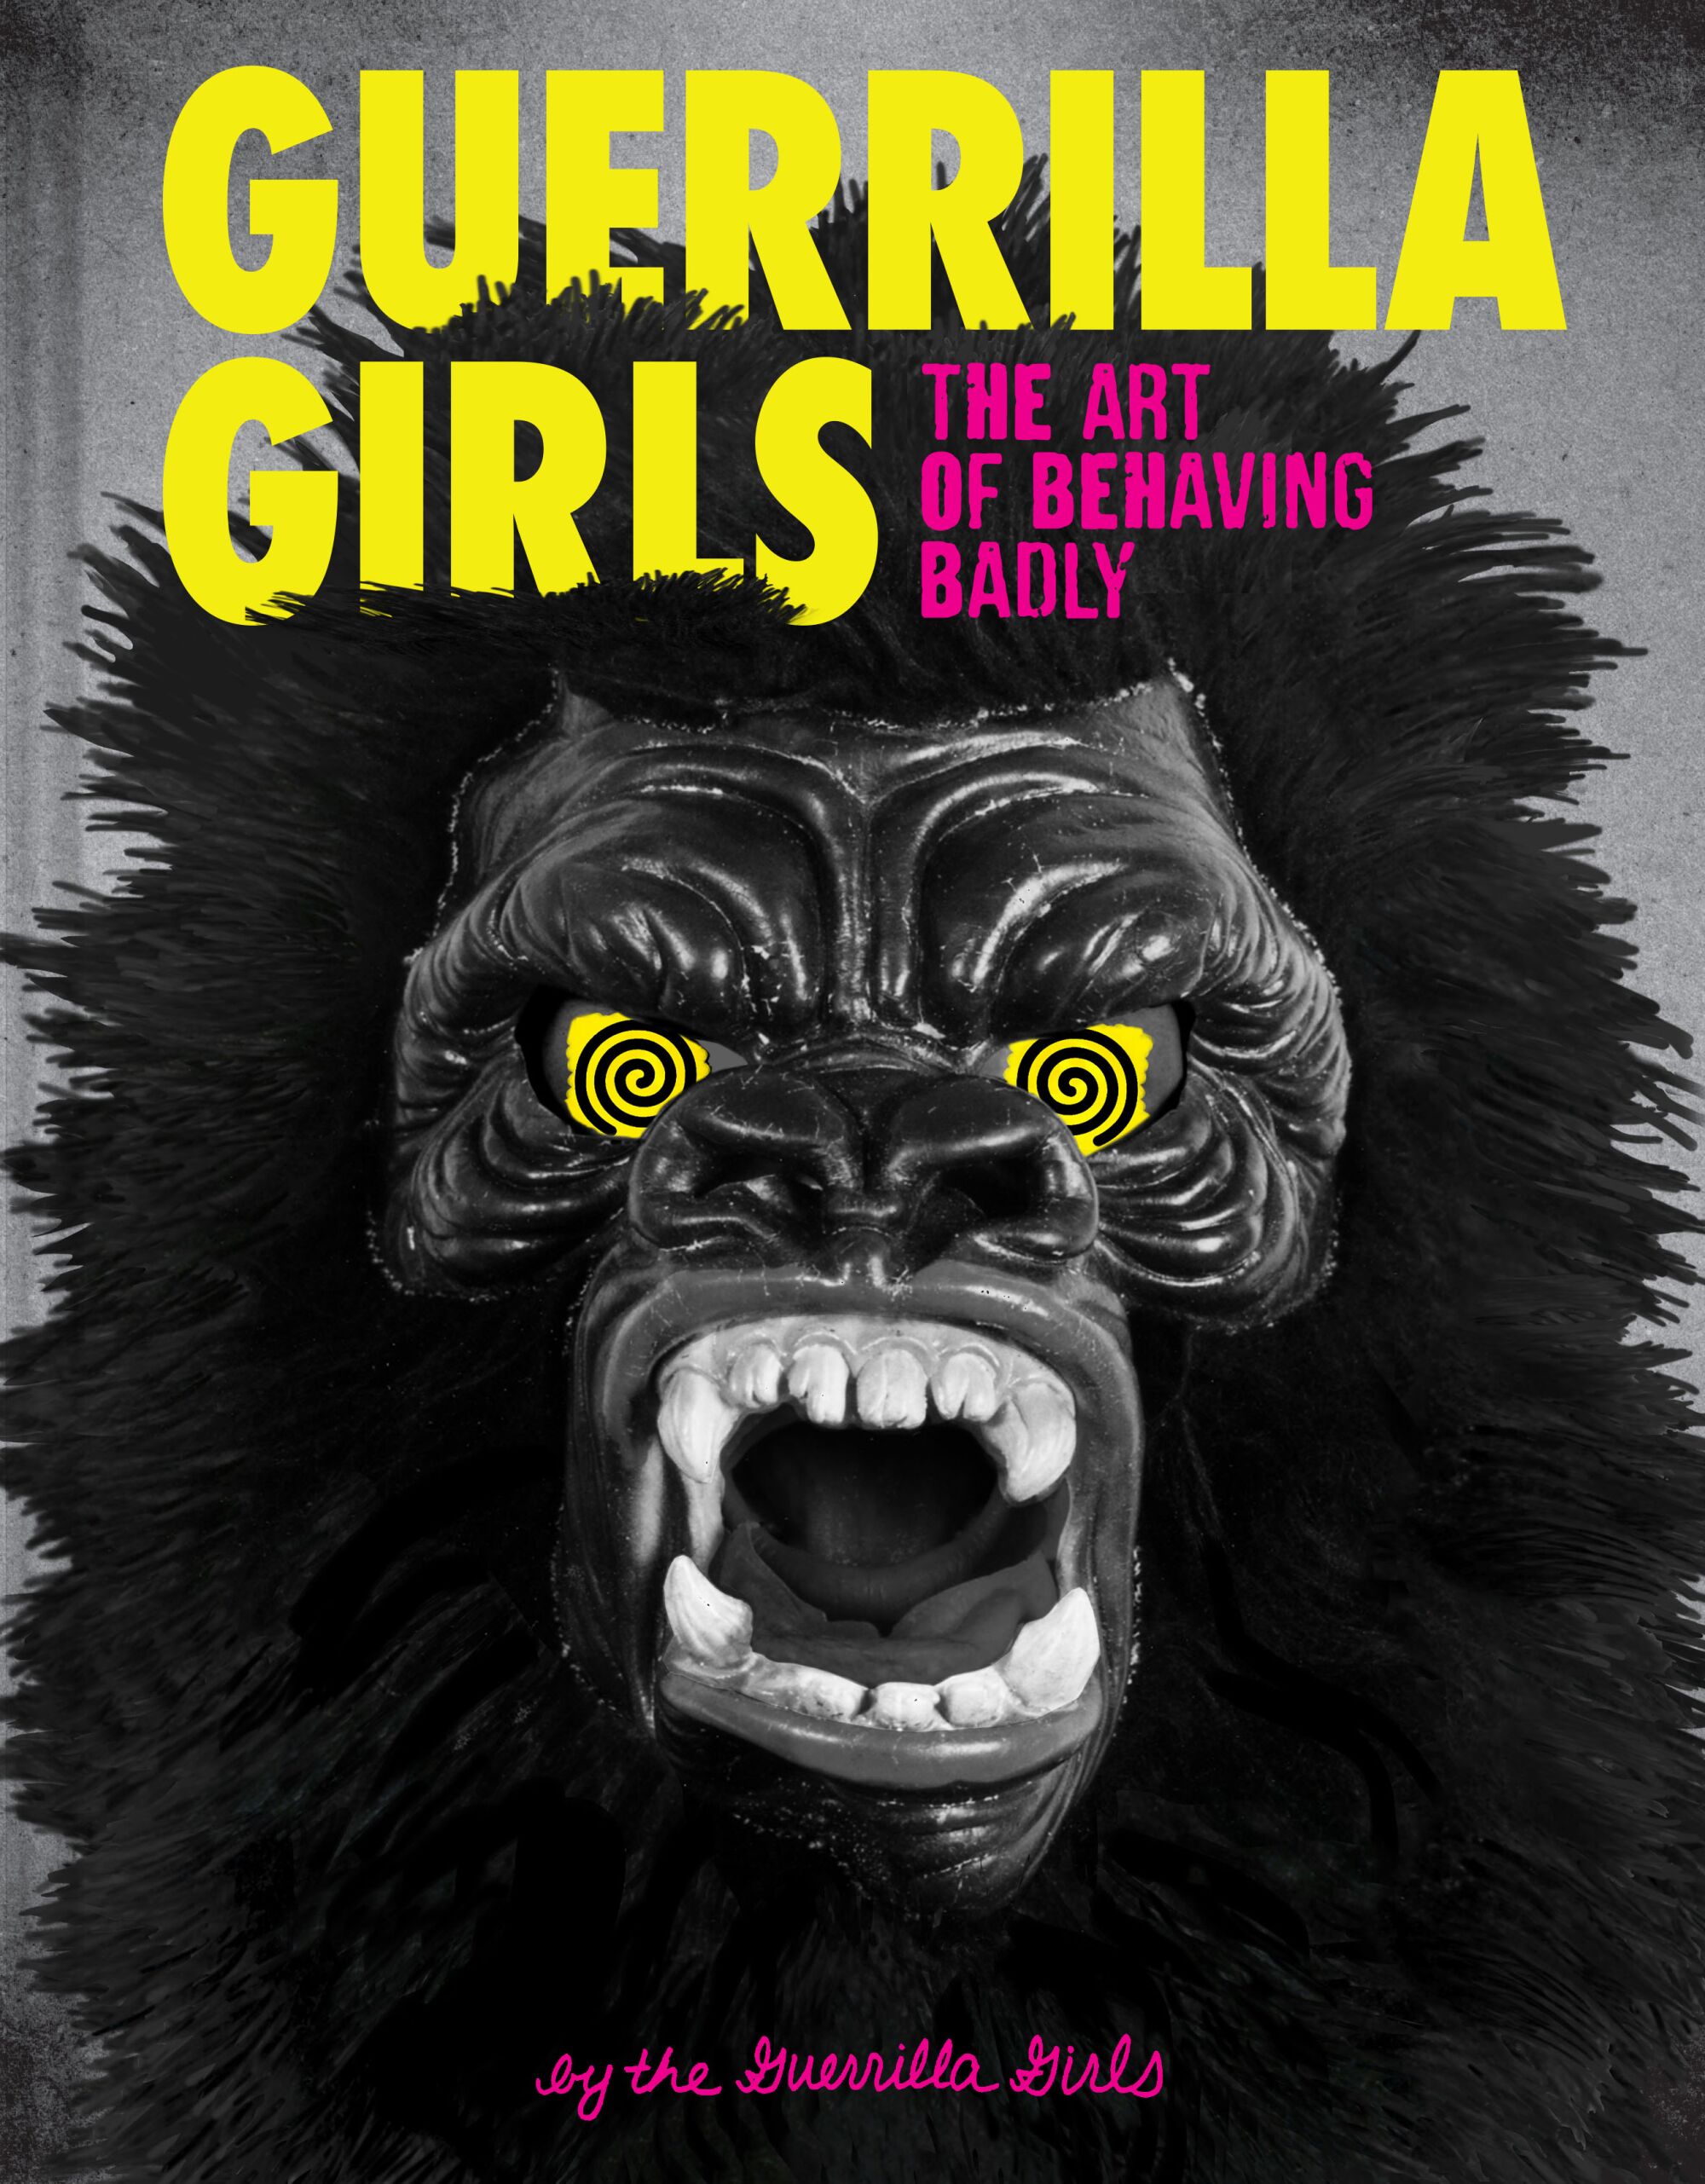 The Guerrilla Girls, "Guerrilla Girls: The Art of Behaving Badly"